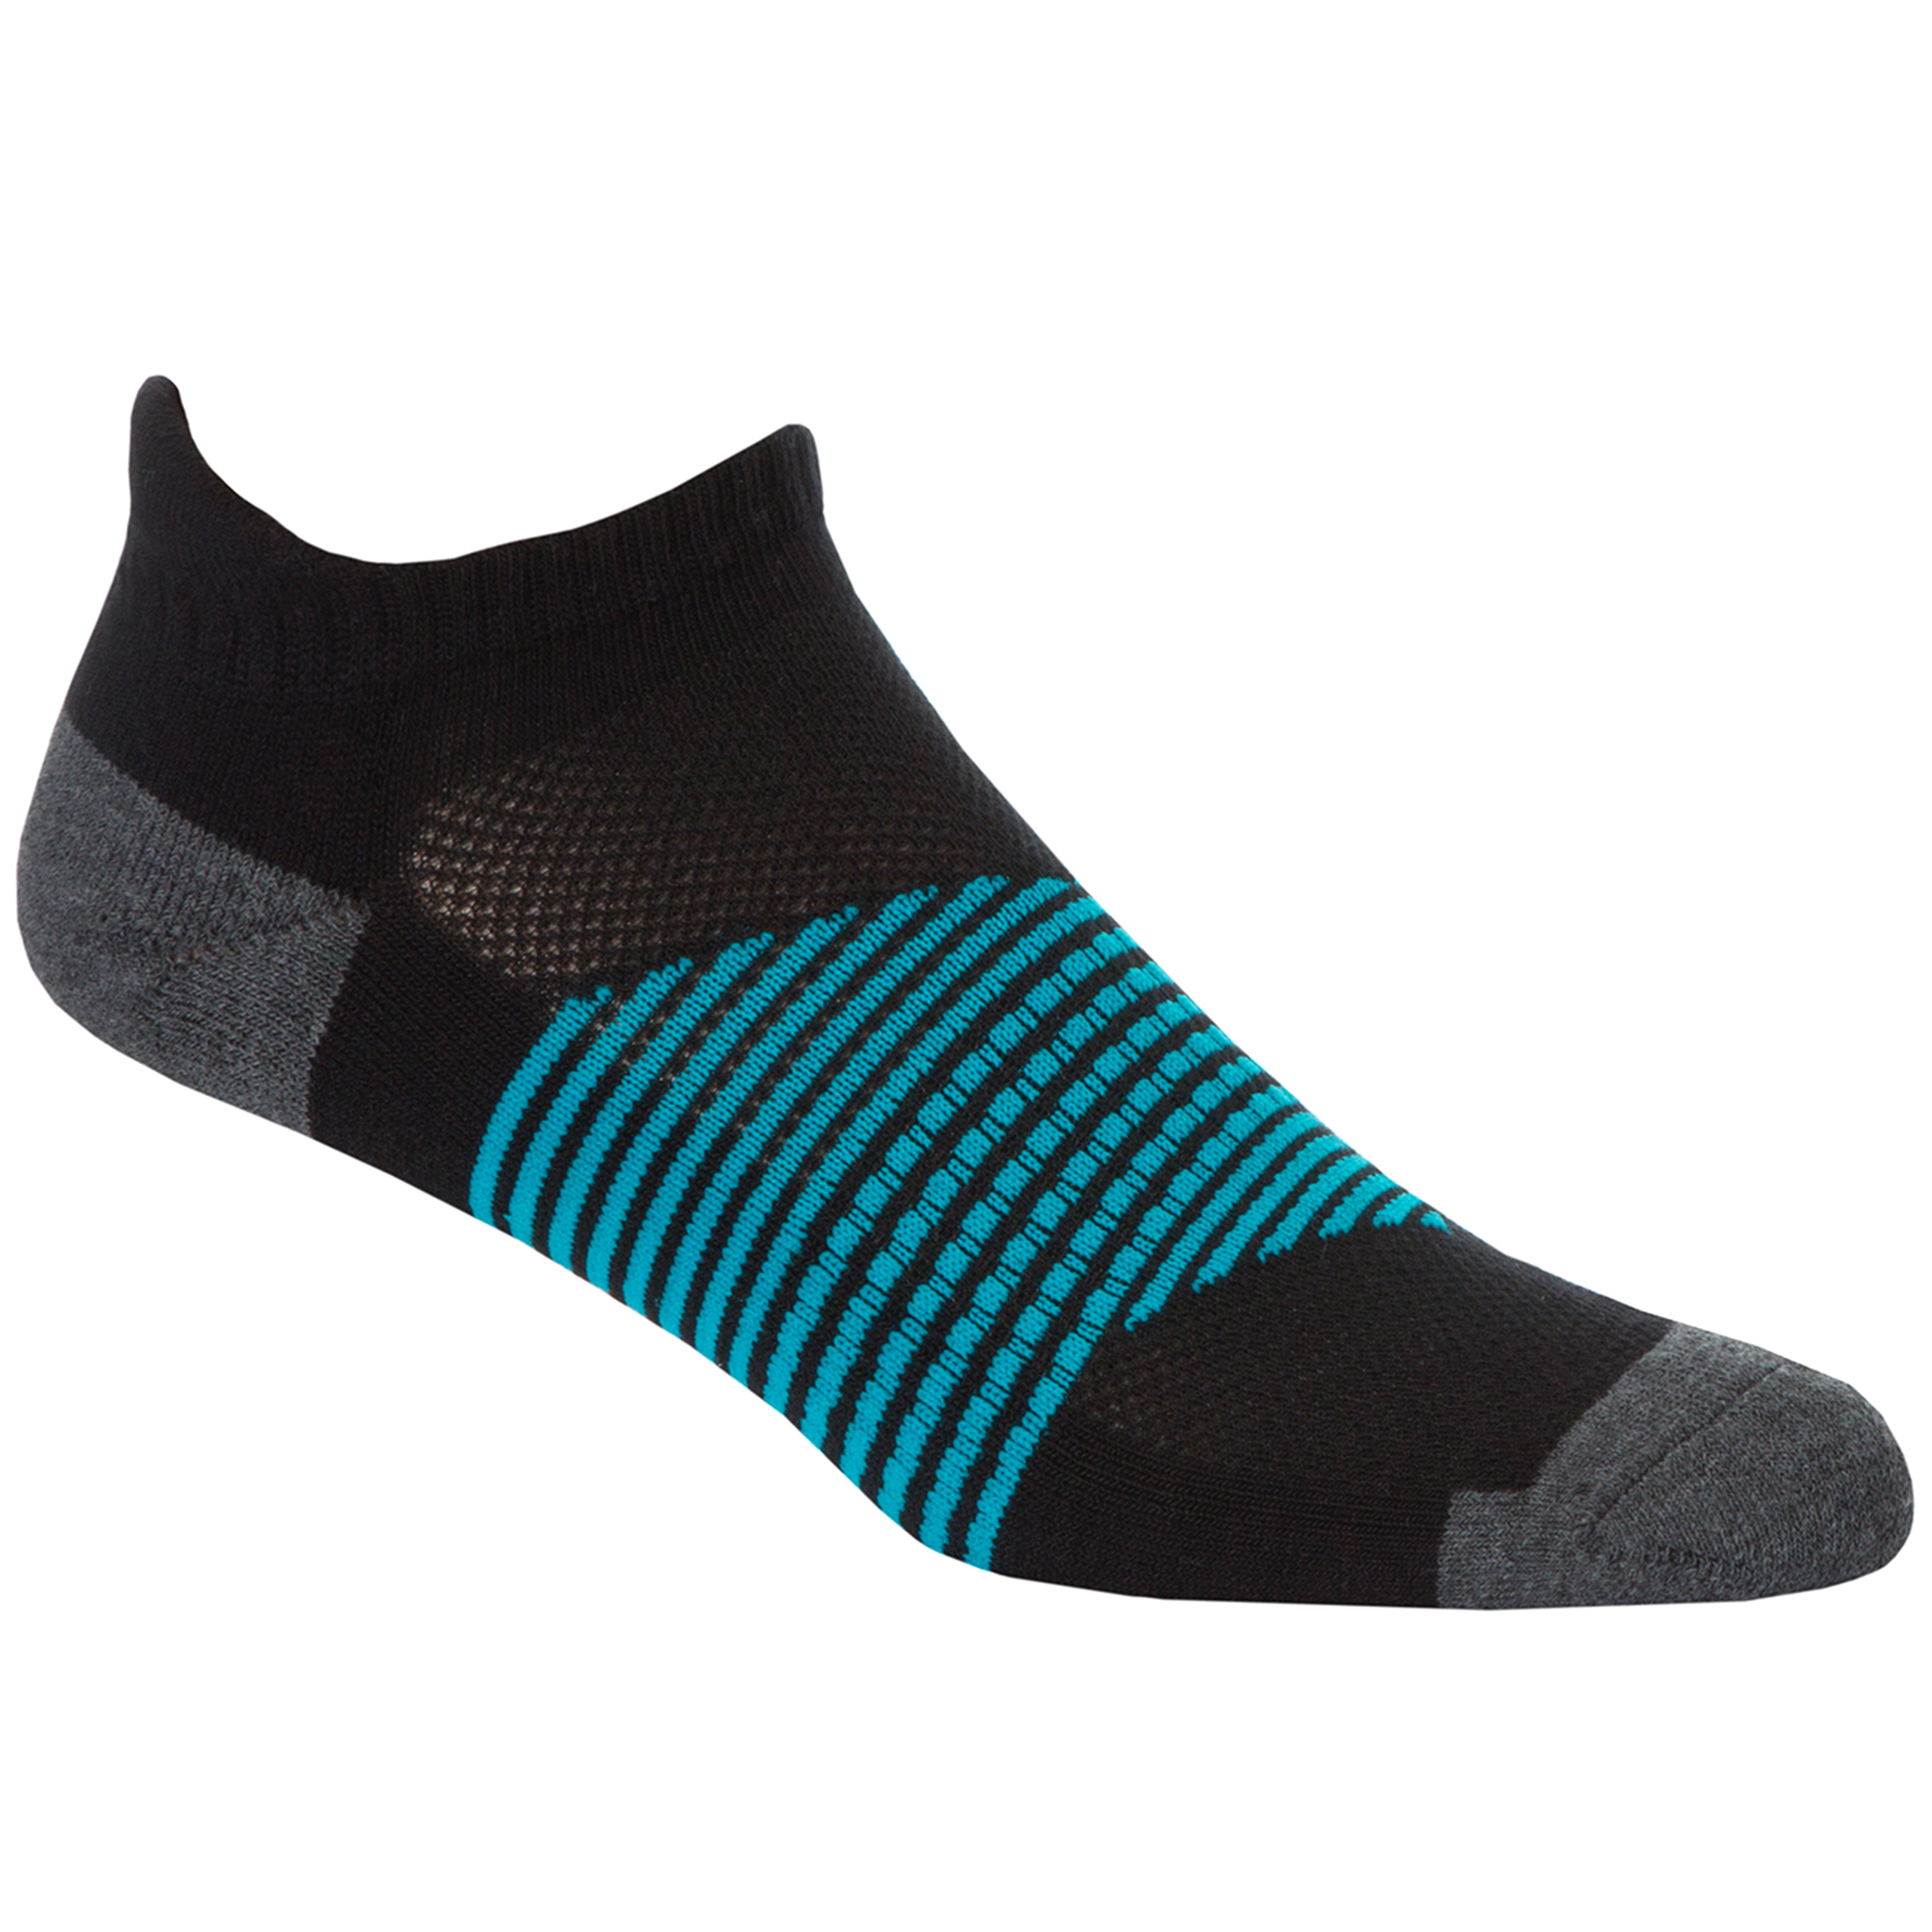 Black Cotton Rich Socks 6/12 Pairs Of Men's Sport Socks Size 6-11 High Quality 